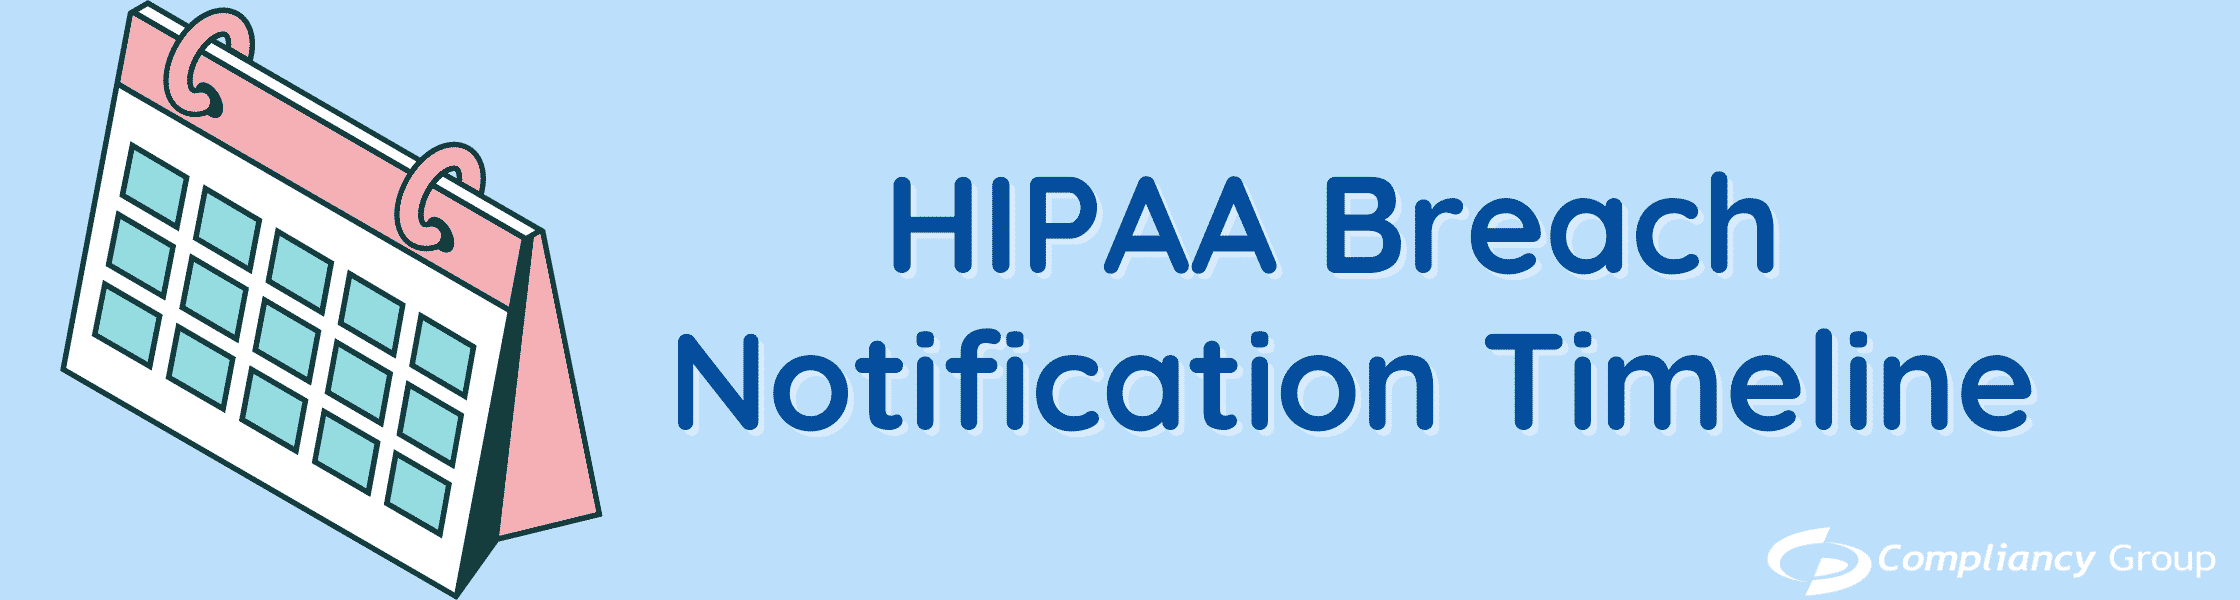 HIPAA Breach Notification Timeline